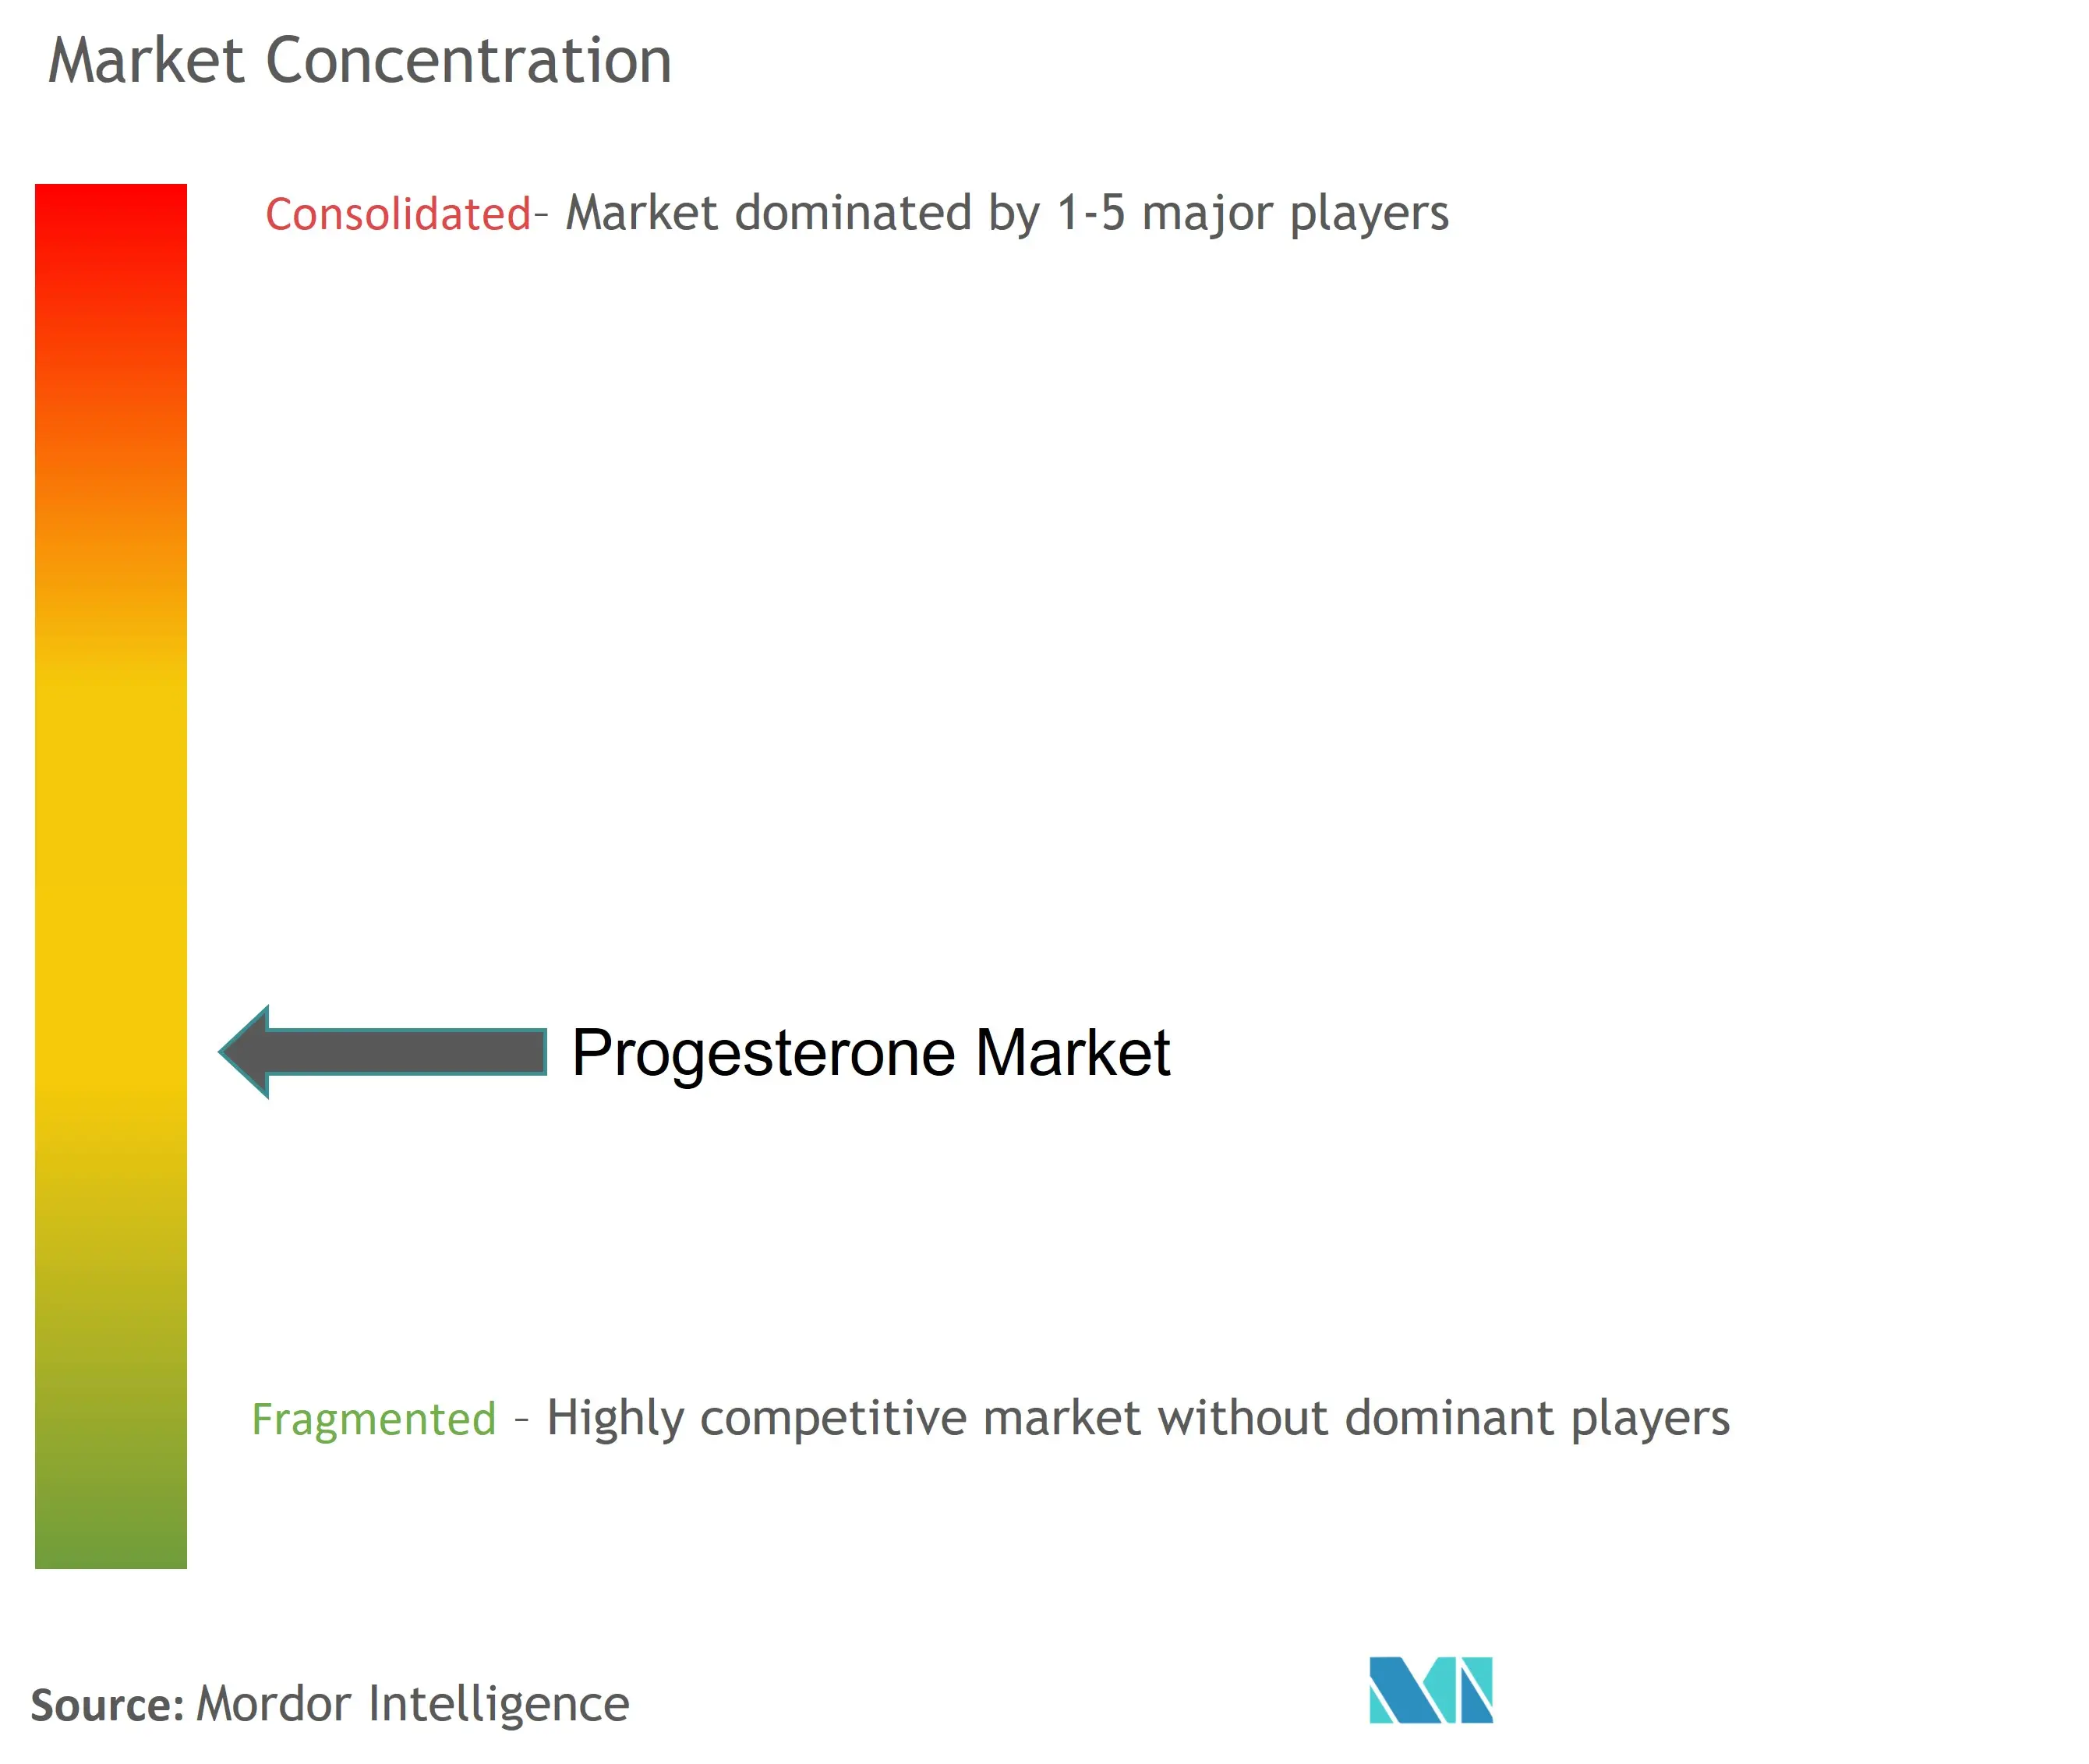 Progesterone Market Concentration